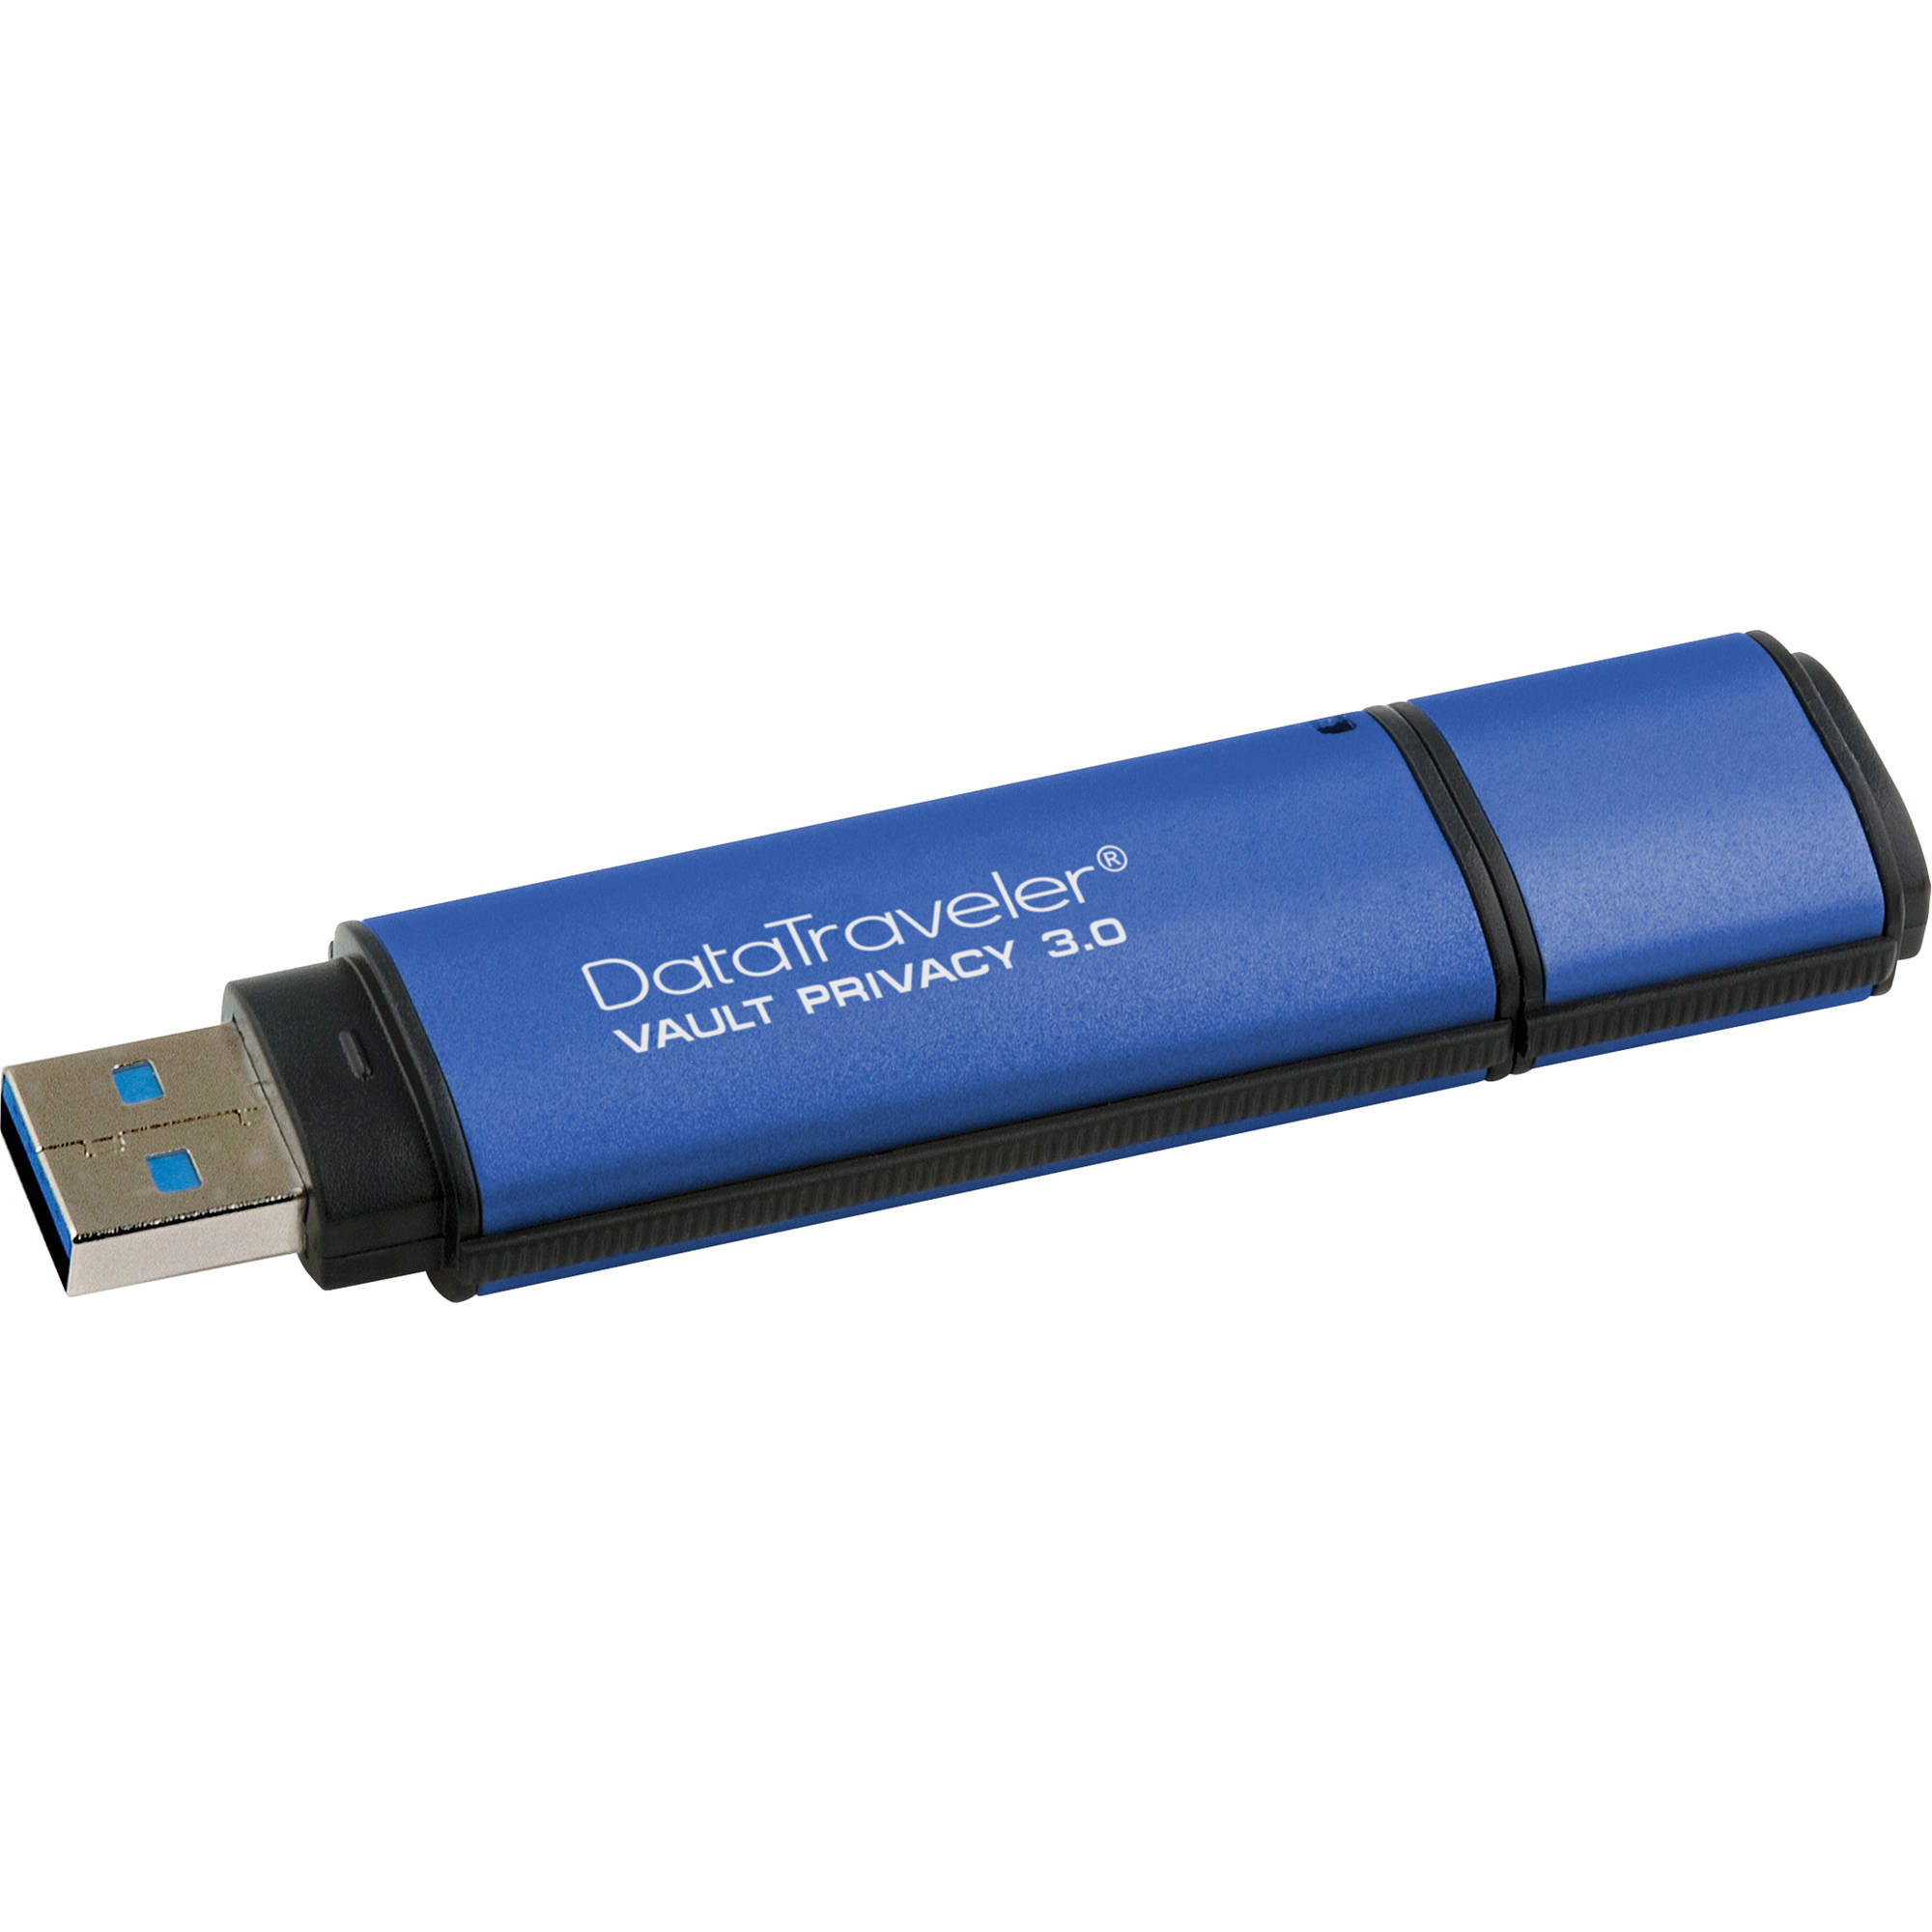 Original Kingston Data Traveler Vault Privacy 32GB USB 3.0 Flash Drive (DTVP30/32GB)